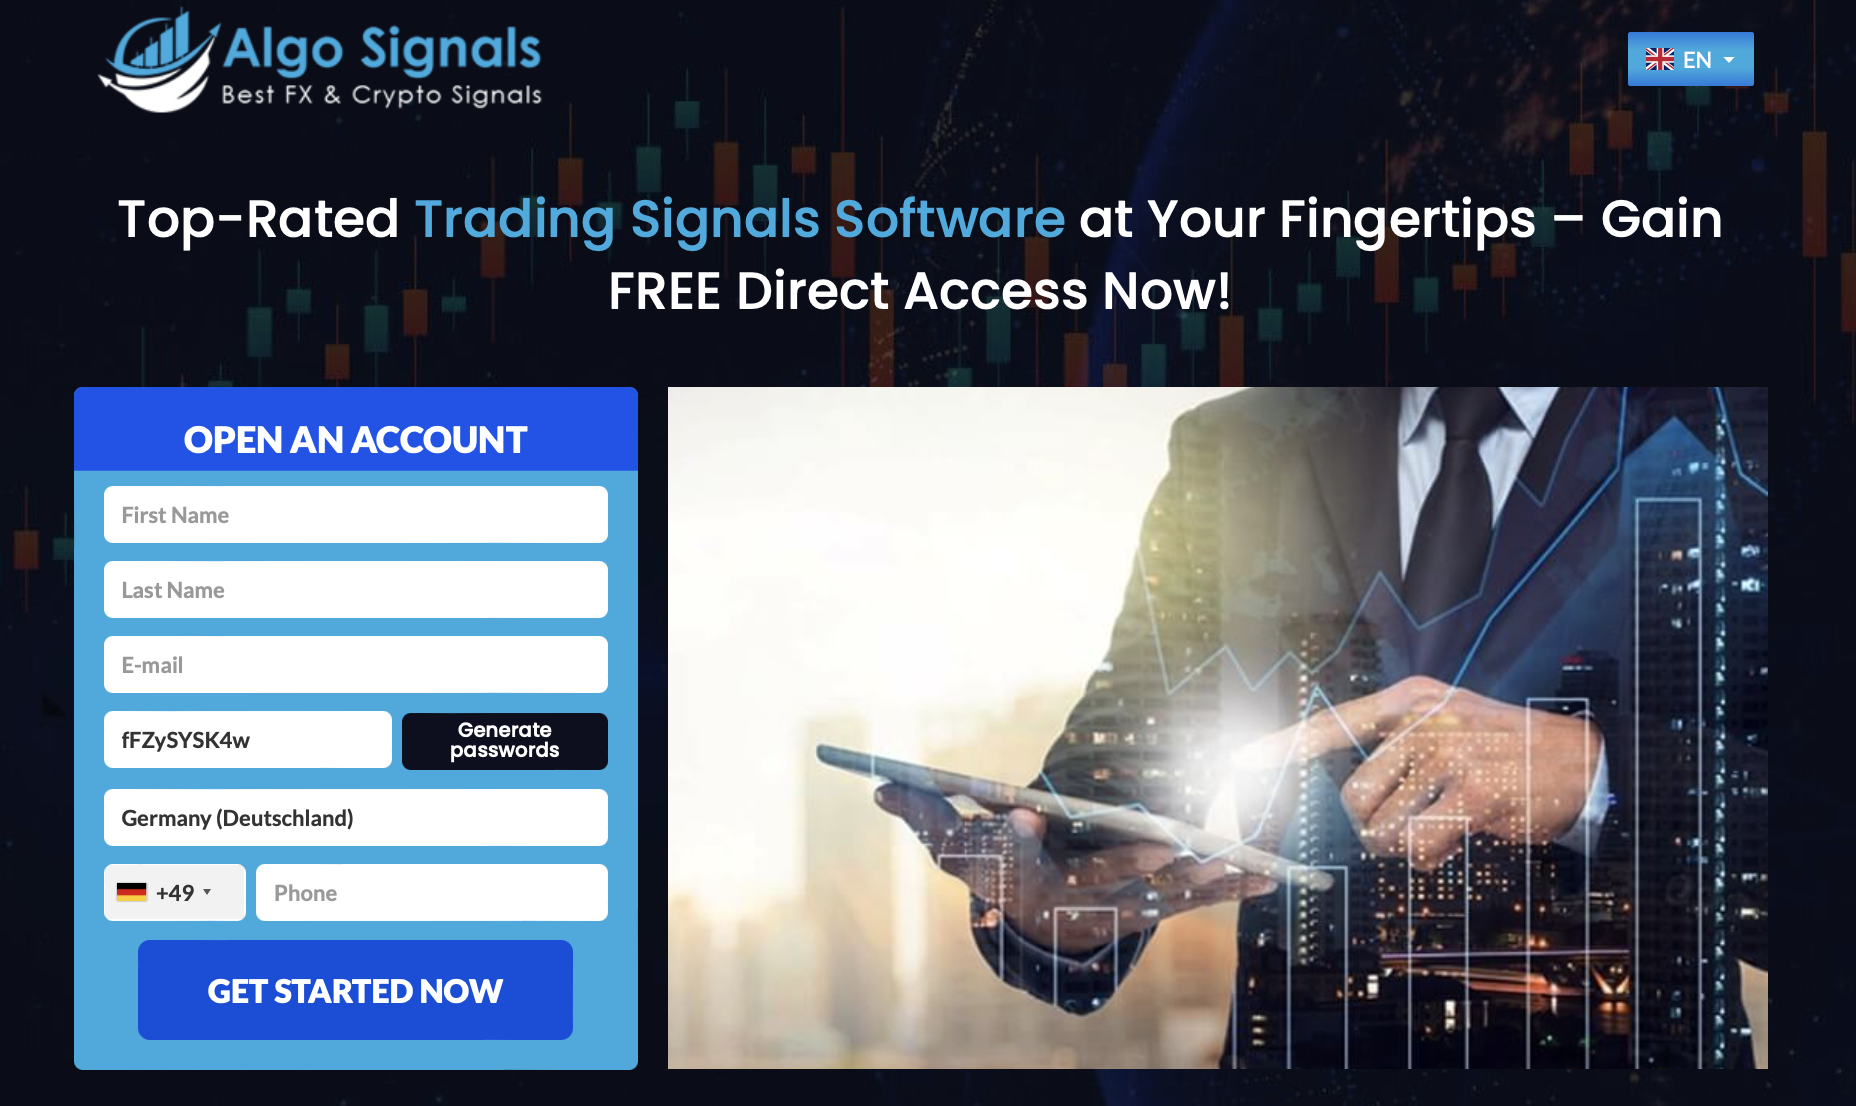 The official website of Algo Signals